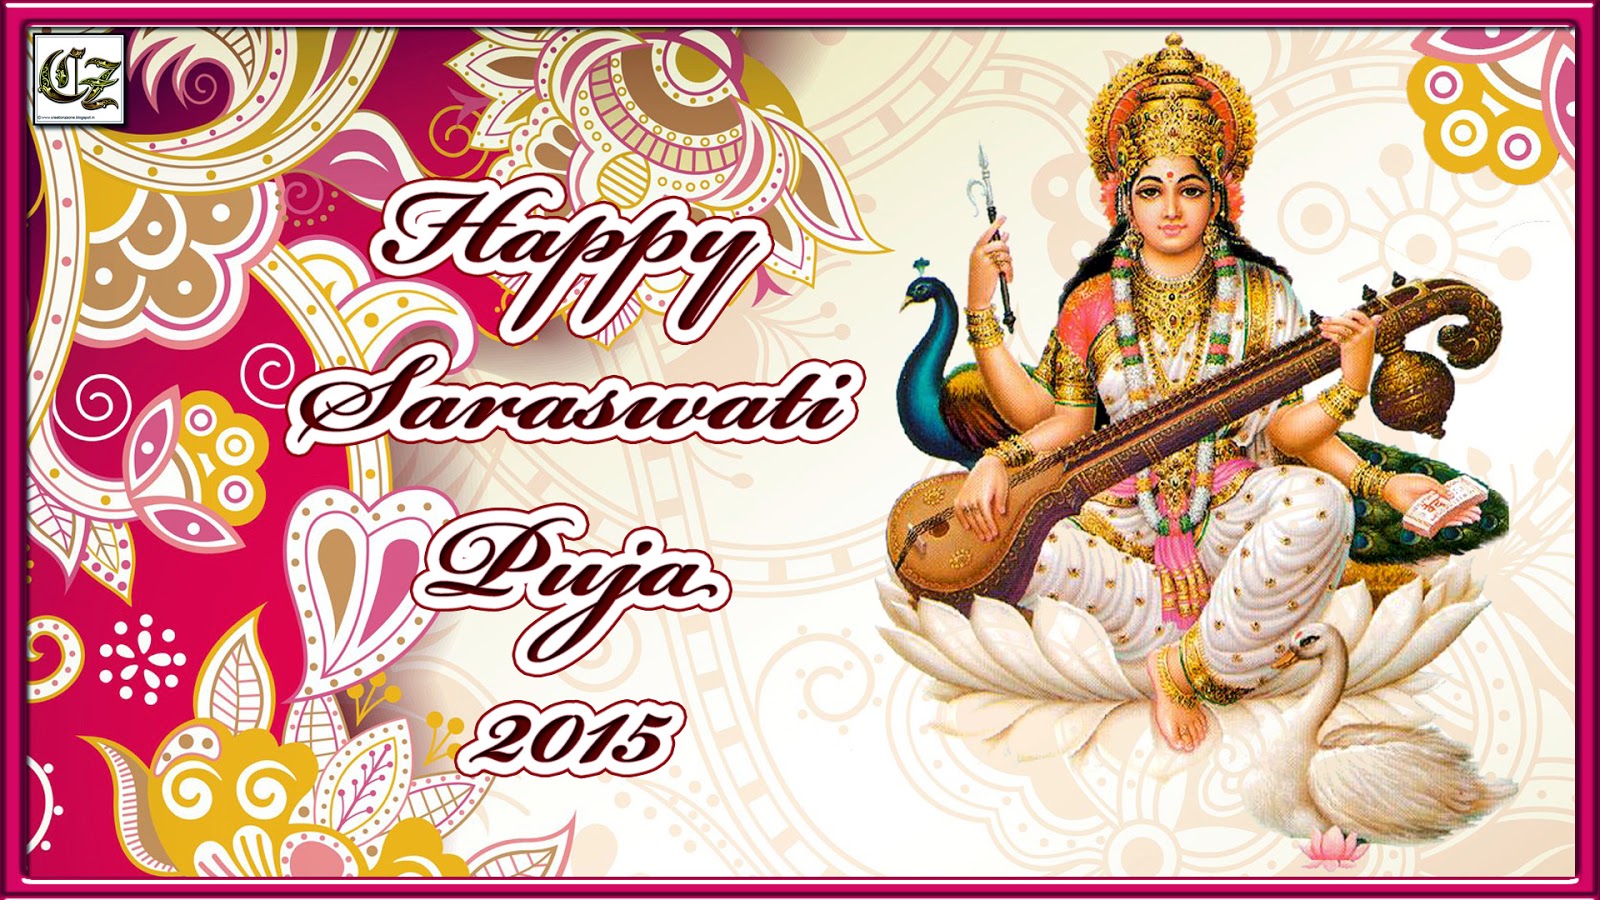 saraswati puja wallpaper,veena,saraswati veena,musical instrument,indian musical instruments,rudra veena